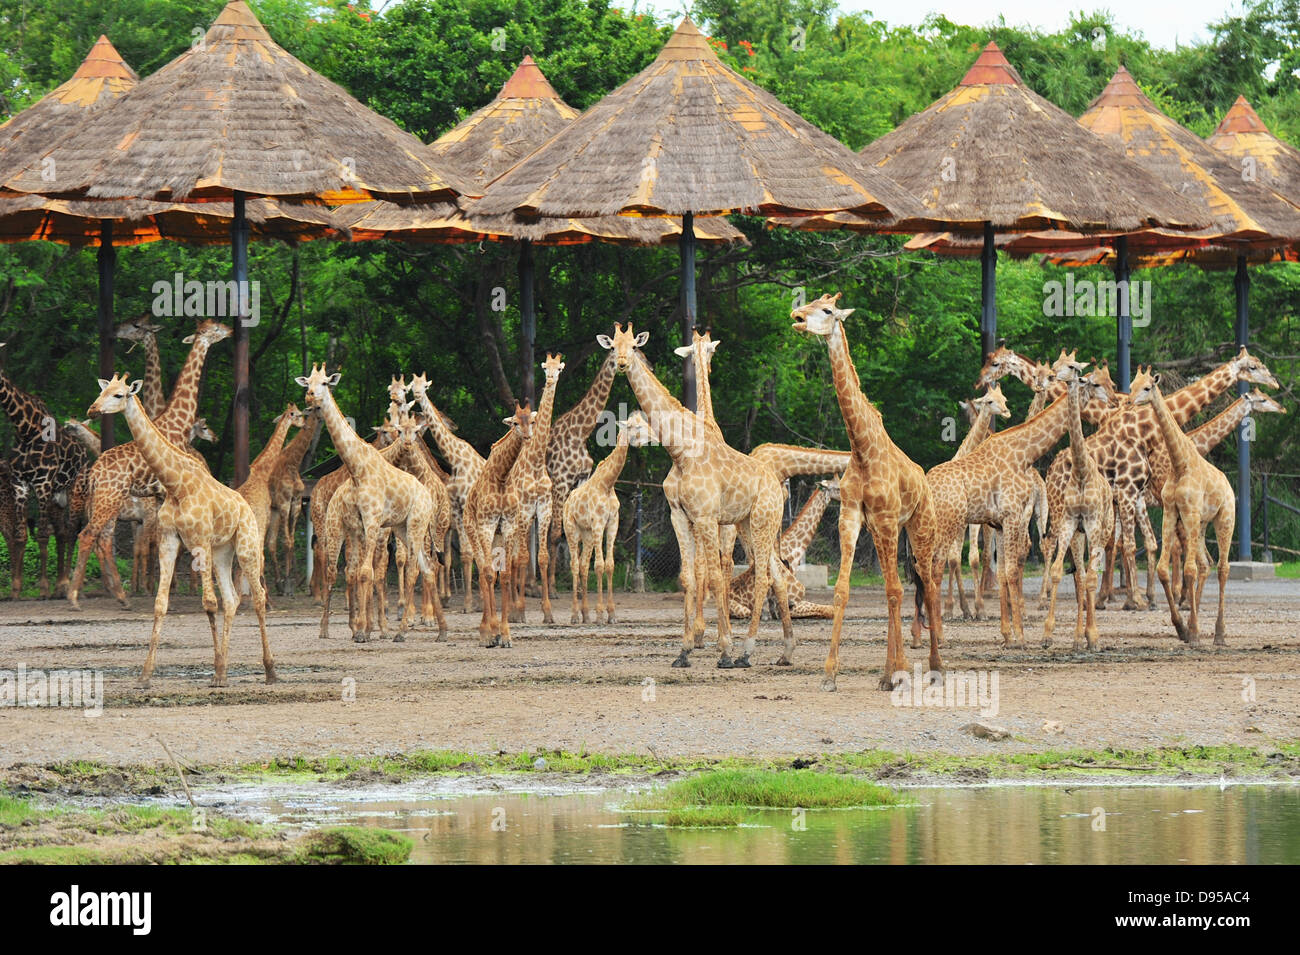 Herd of giraffes in the zoo Stock Photo